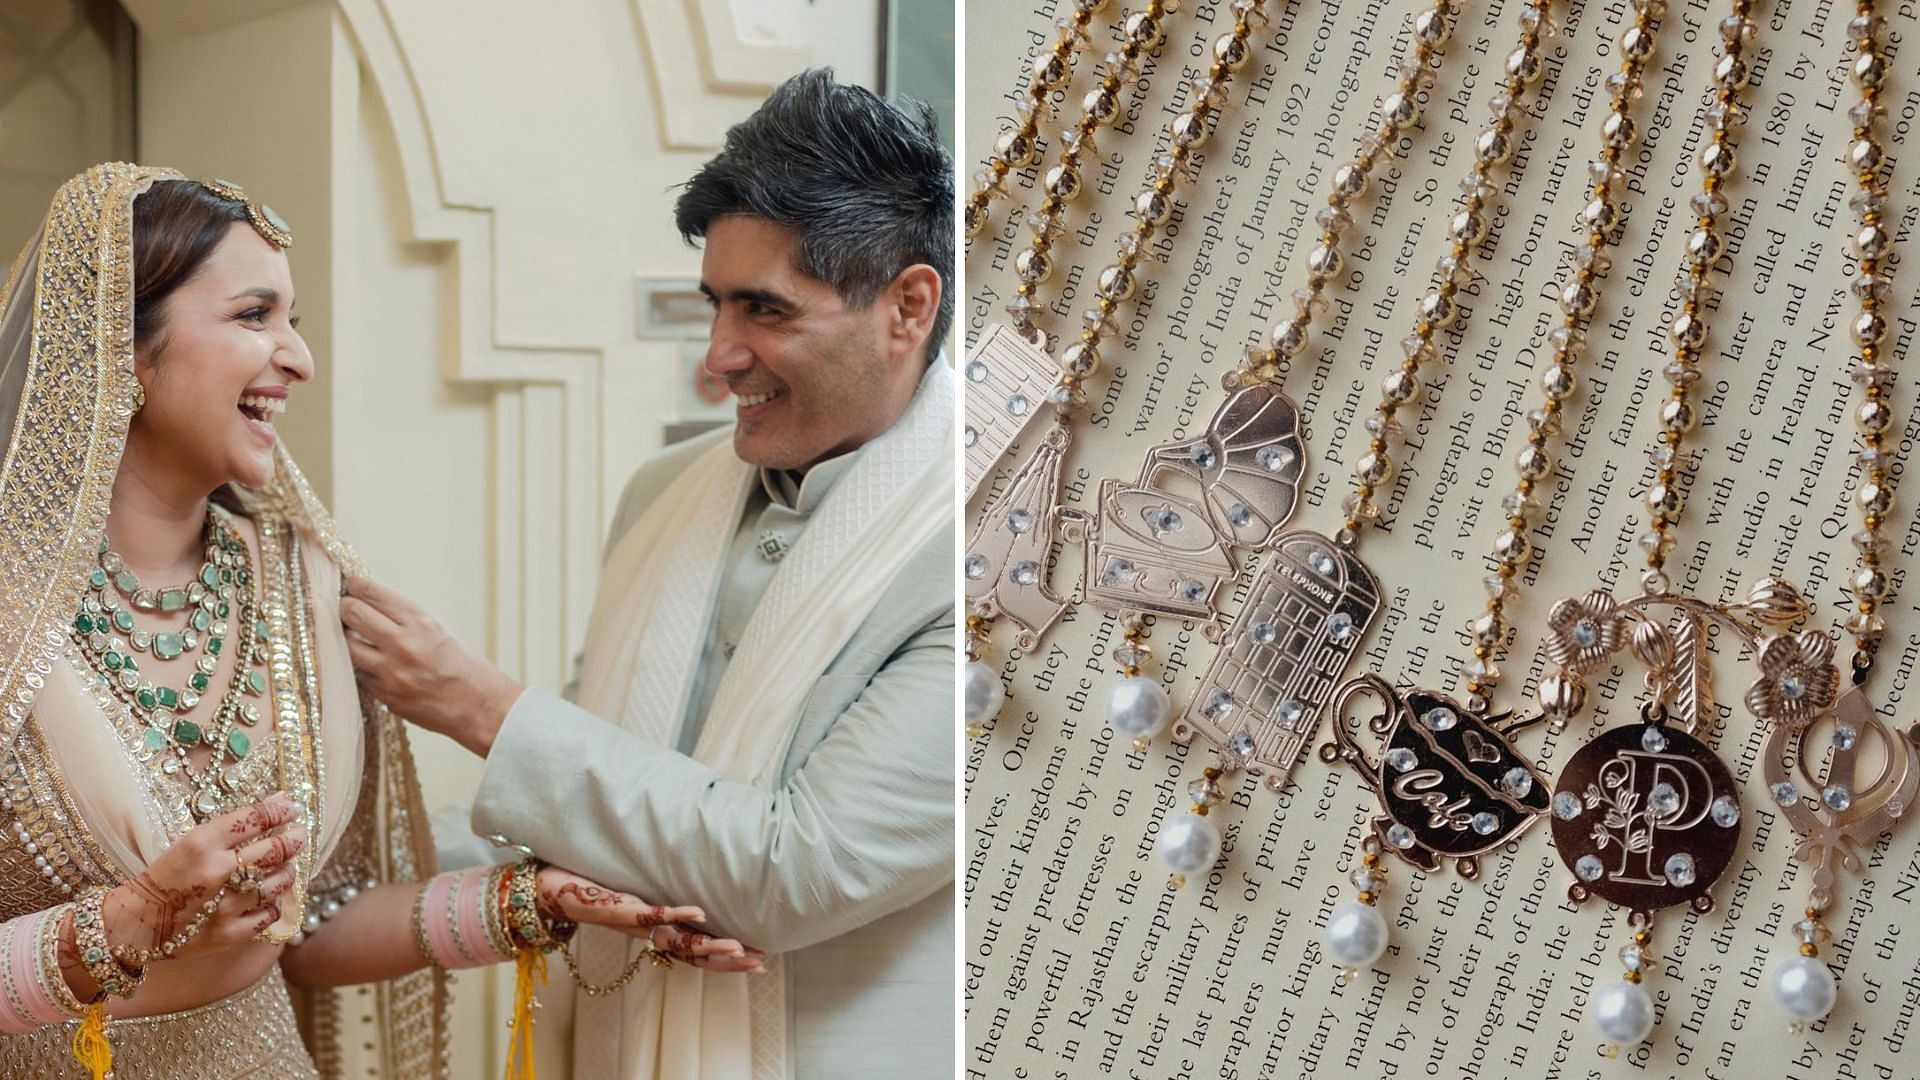 <div class="paragraphs"><p>Parineeti Chopra wore a stunning ivory lehenga by ace fashion designer Manish Malhotra.</p></div>